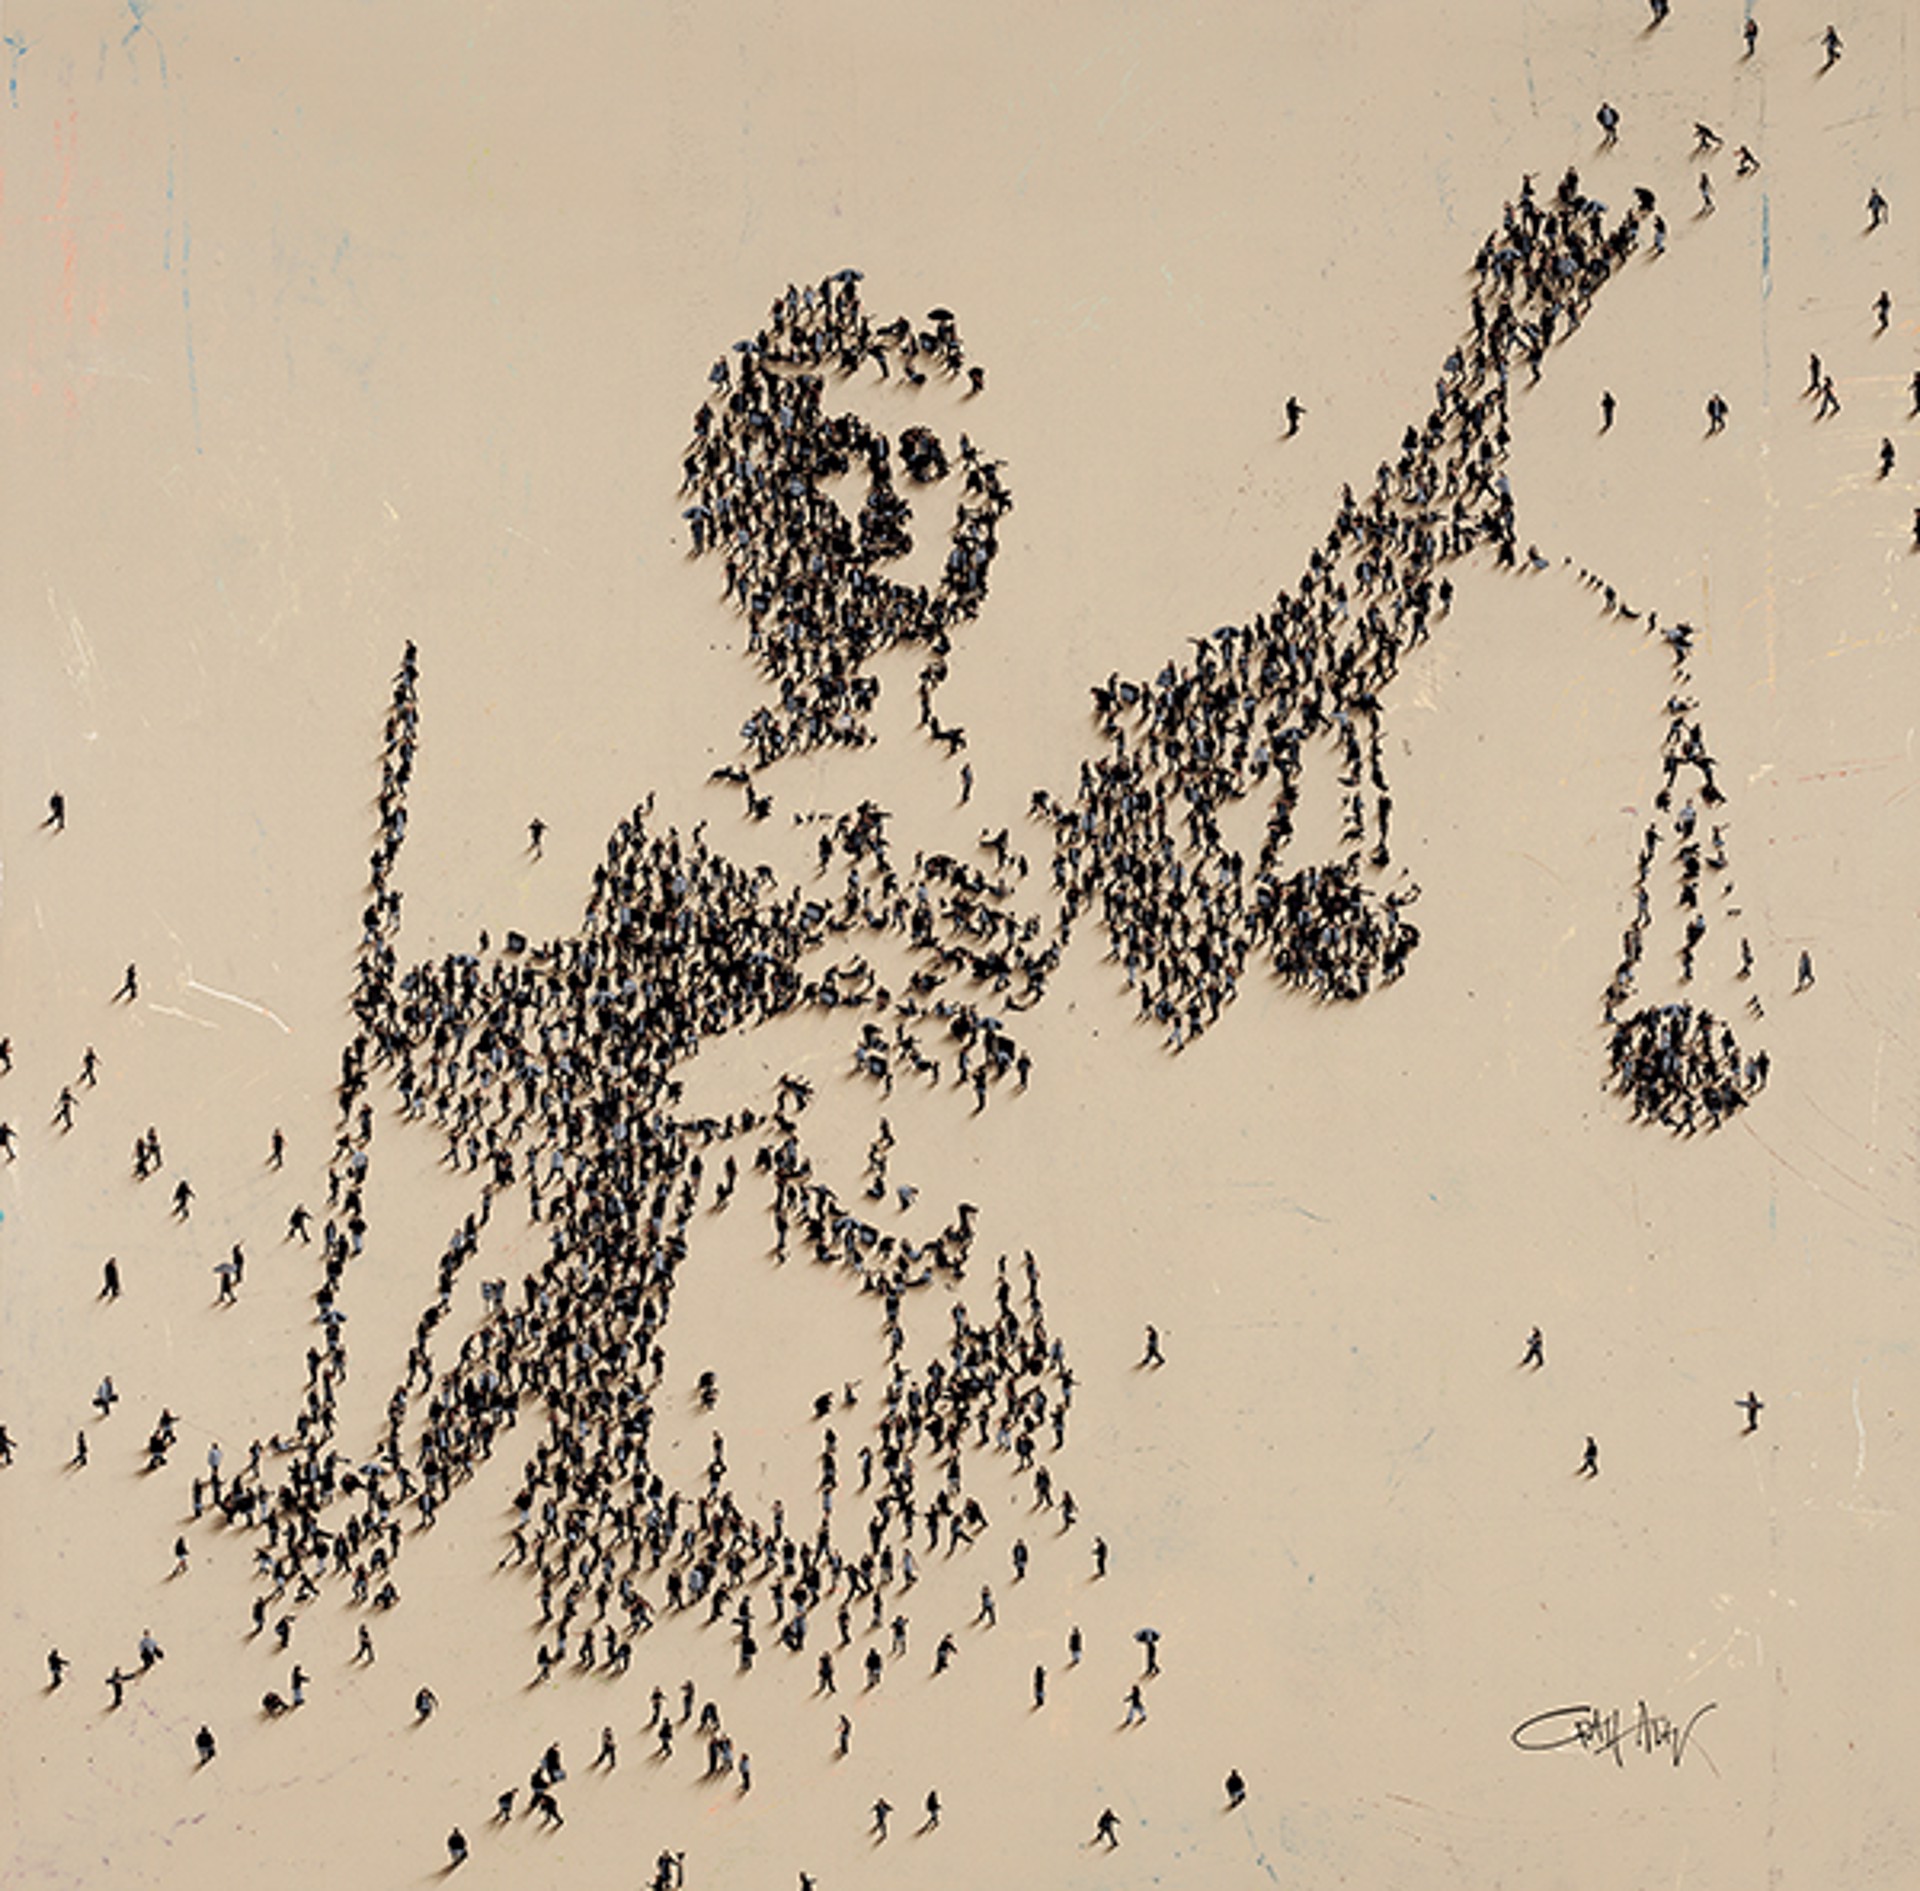 Lady Justice by Craig Alan, Populus